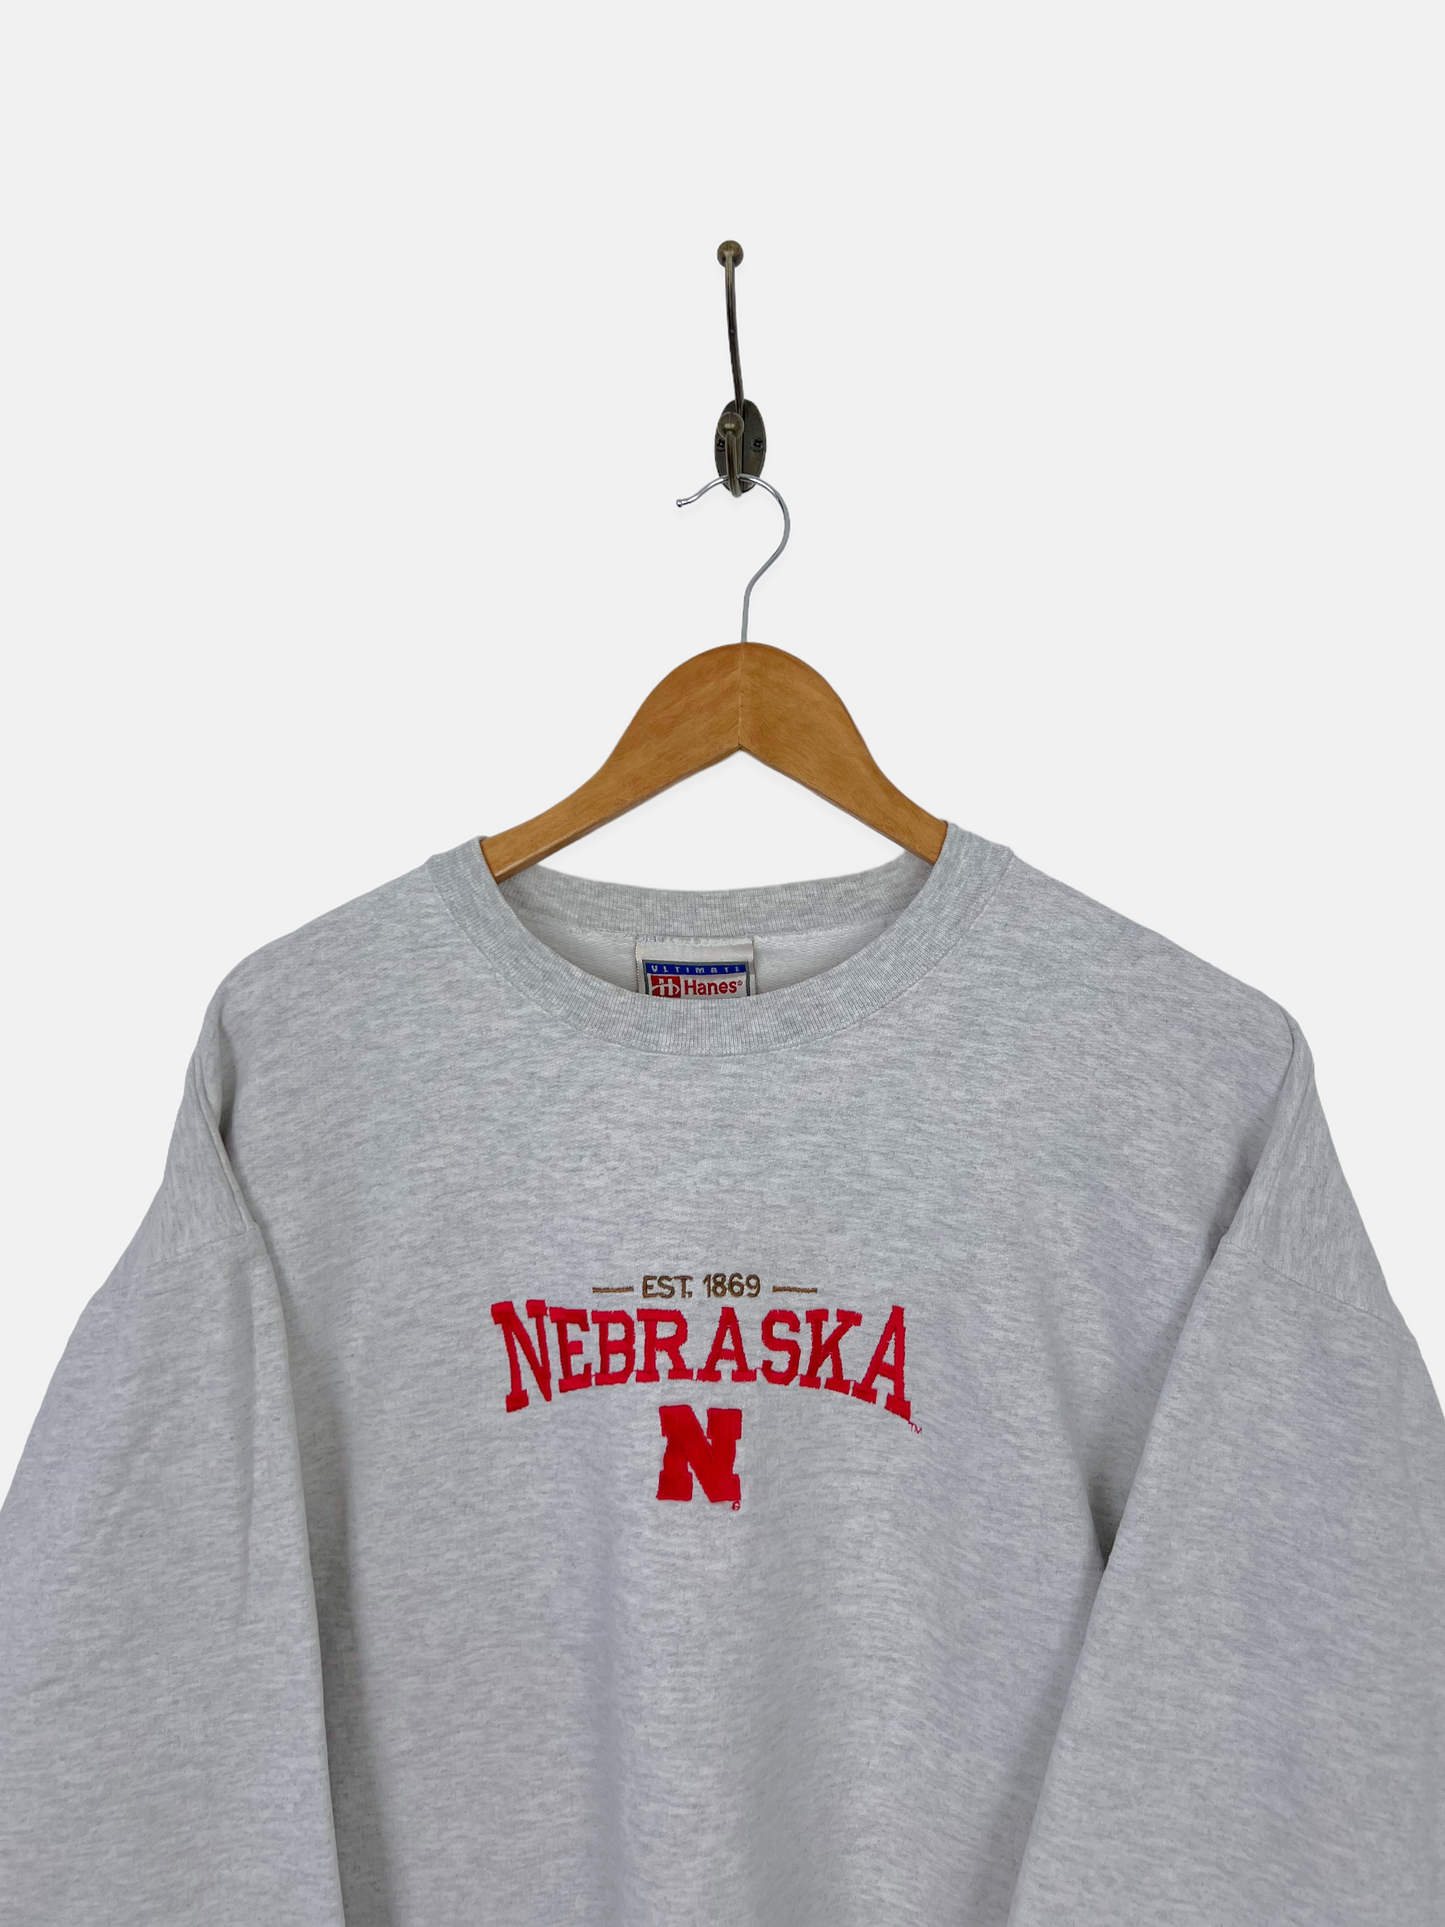 90's Nebraska University Embroidered Vintage Sweatshirt Size 12